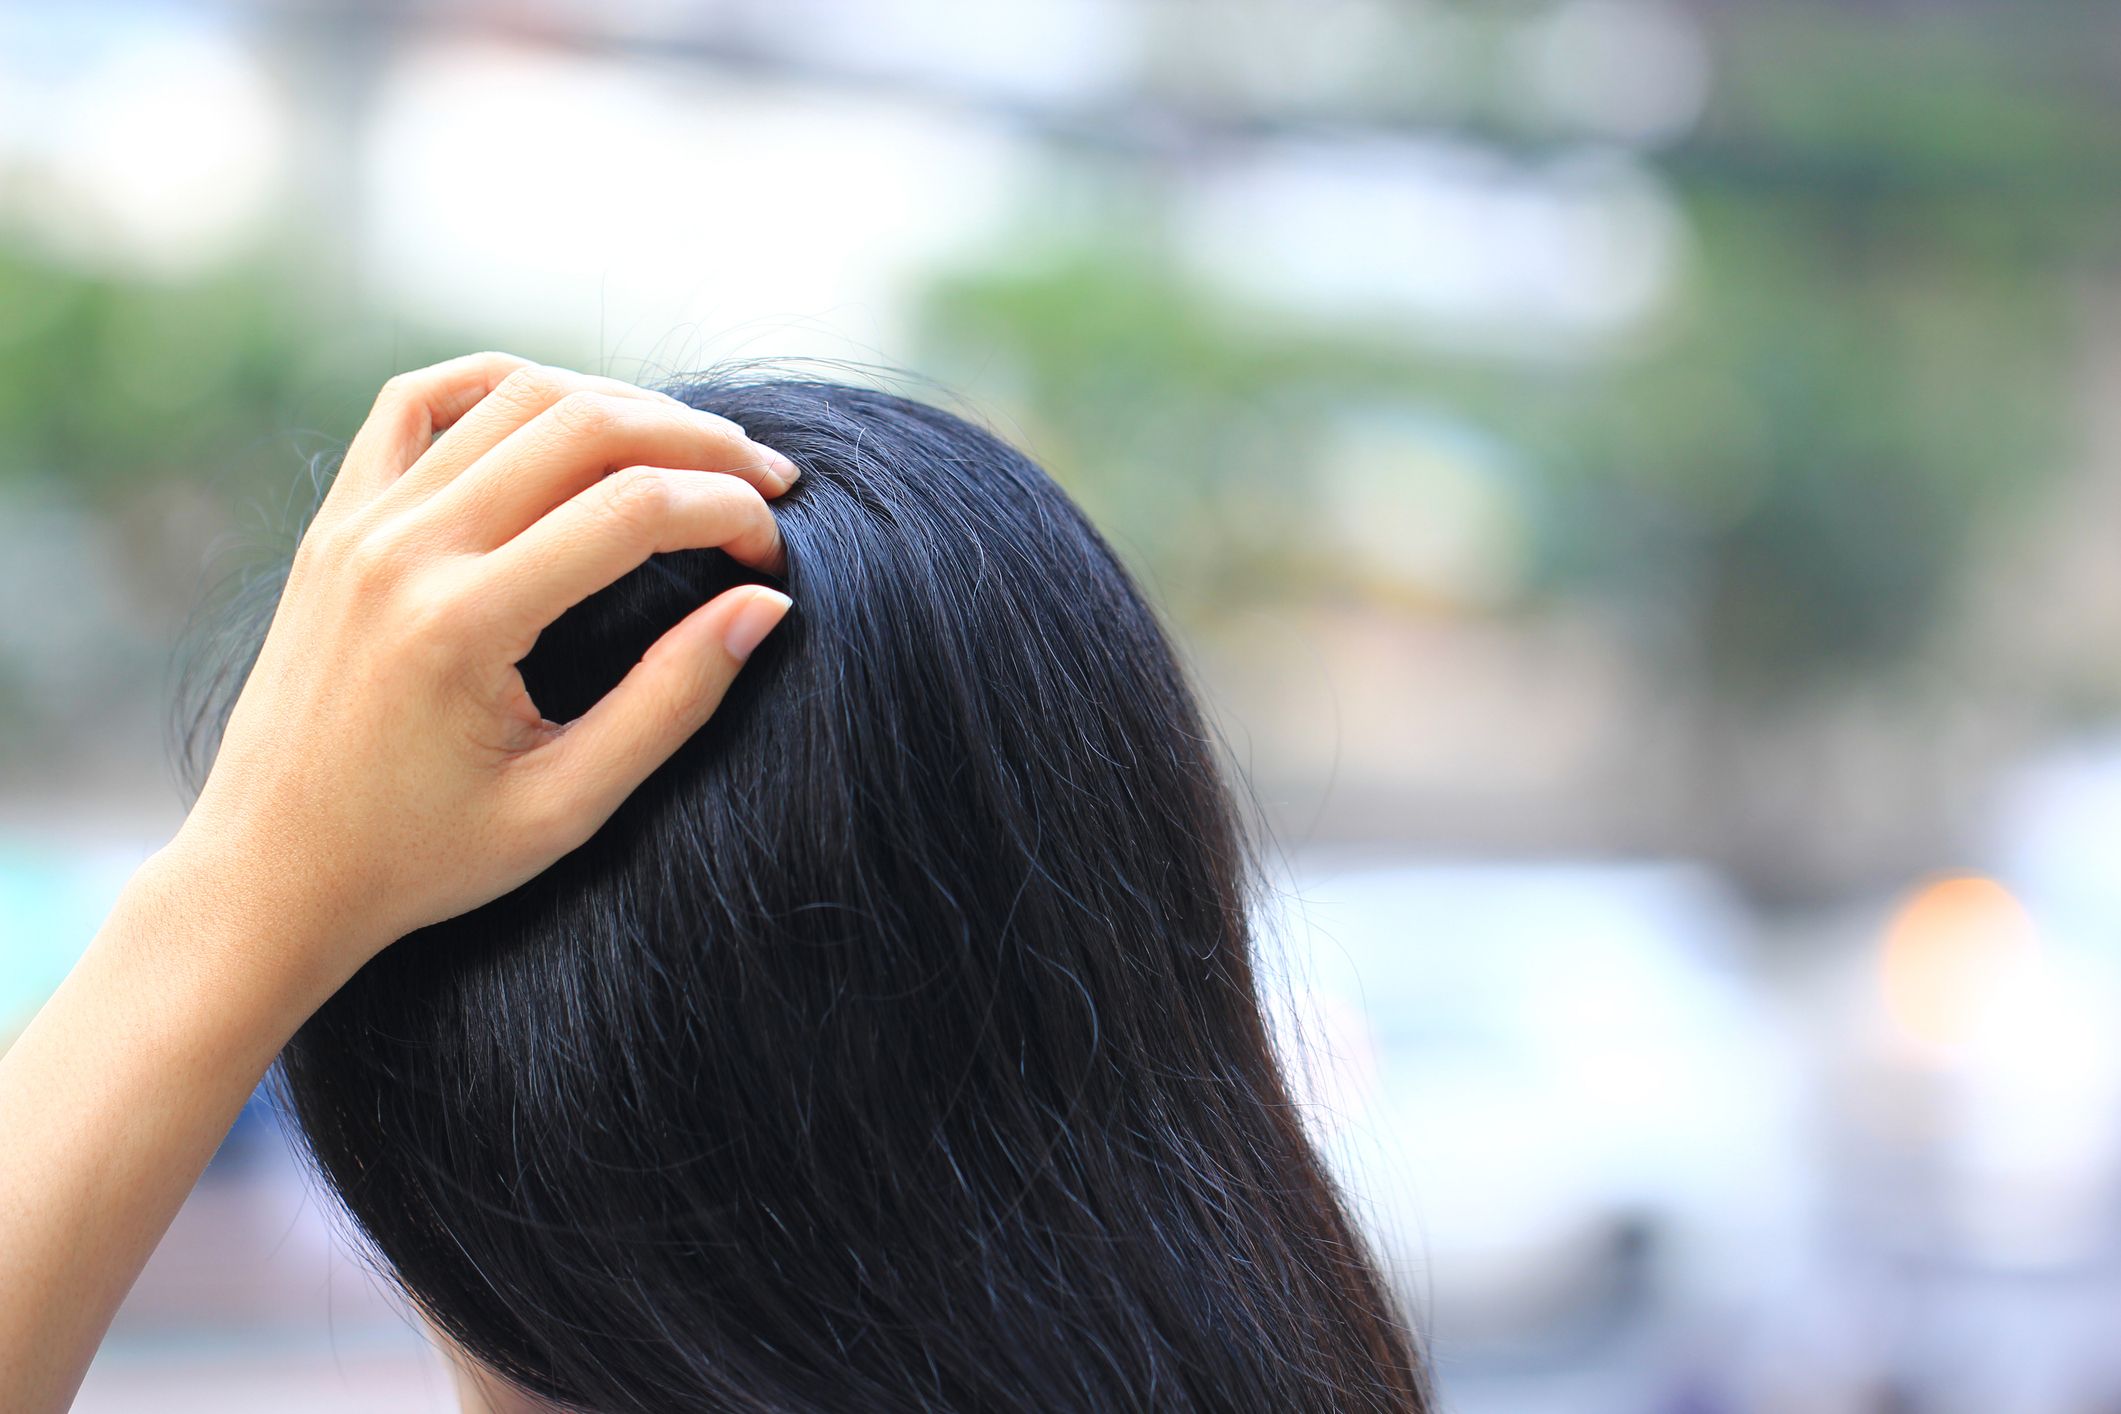 How To Treat Eczema Hair Loss  eczema seborrheic dermatitis and more   The Eczema Company Blog blog